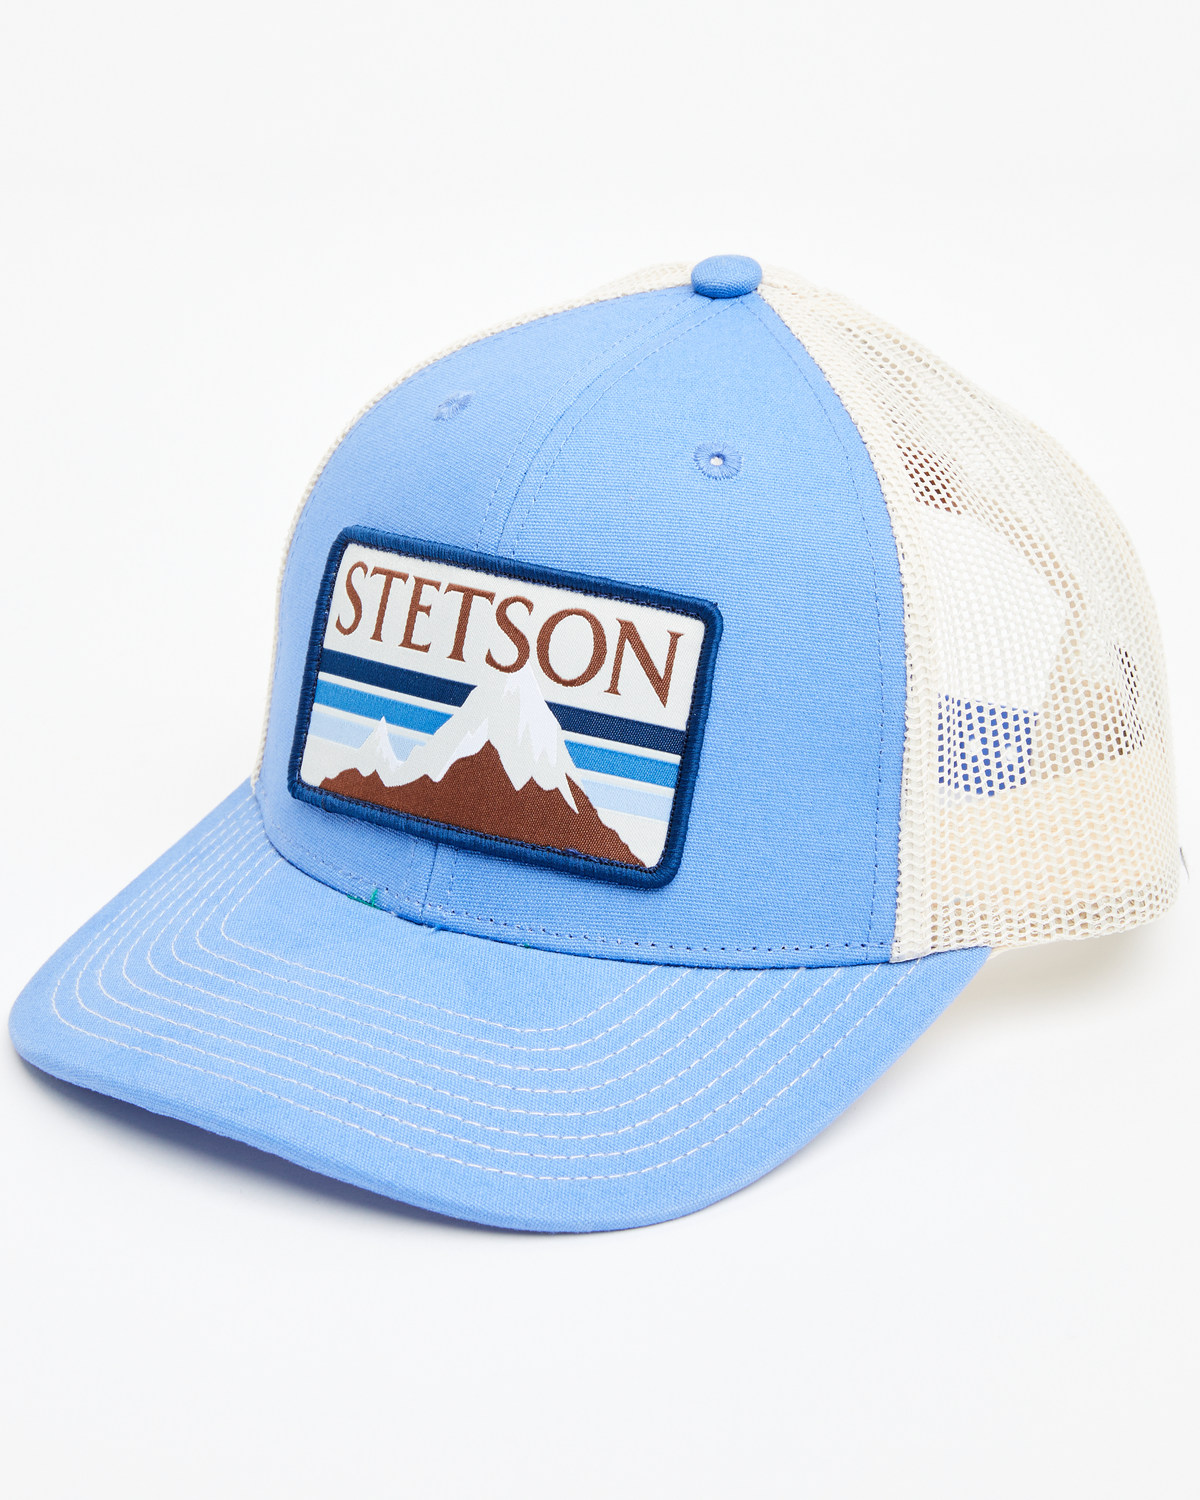 Stetson Men's Mountain Label Patch Trucker Cap